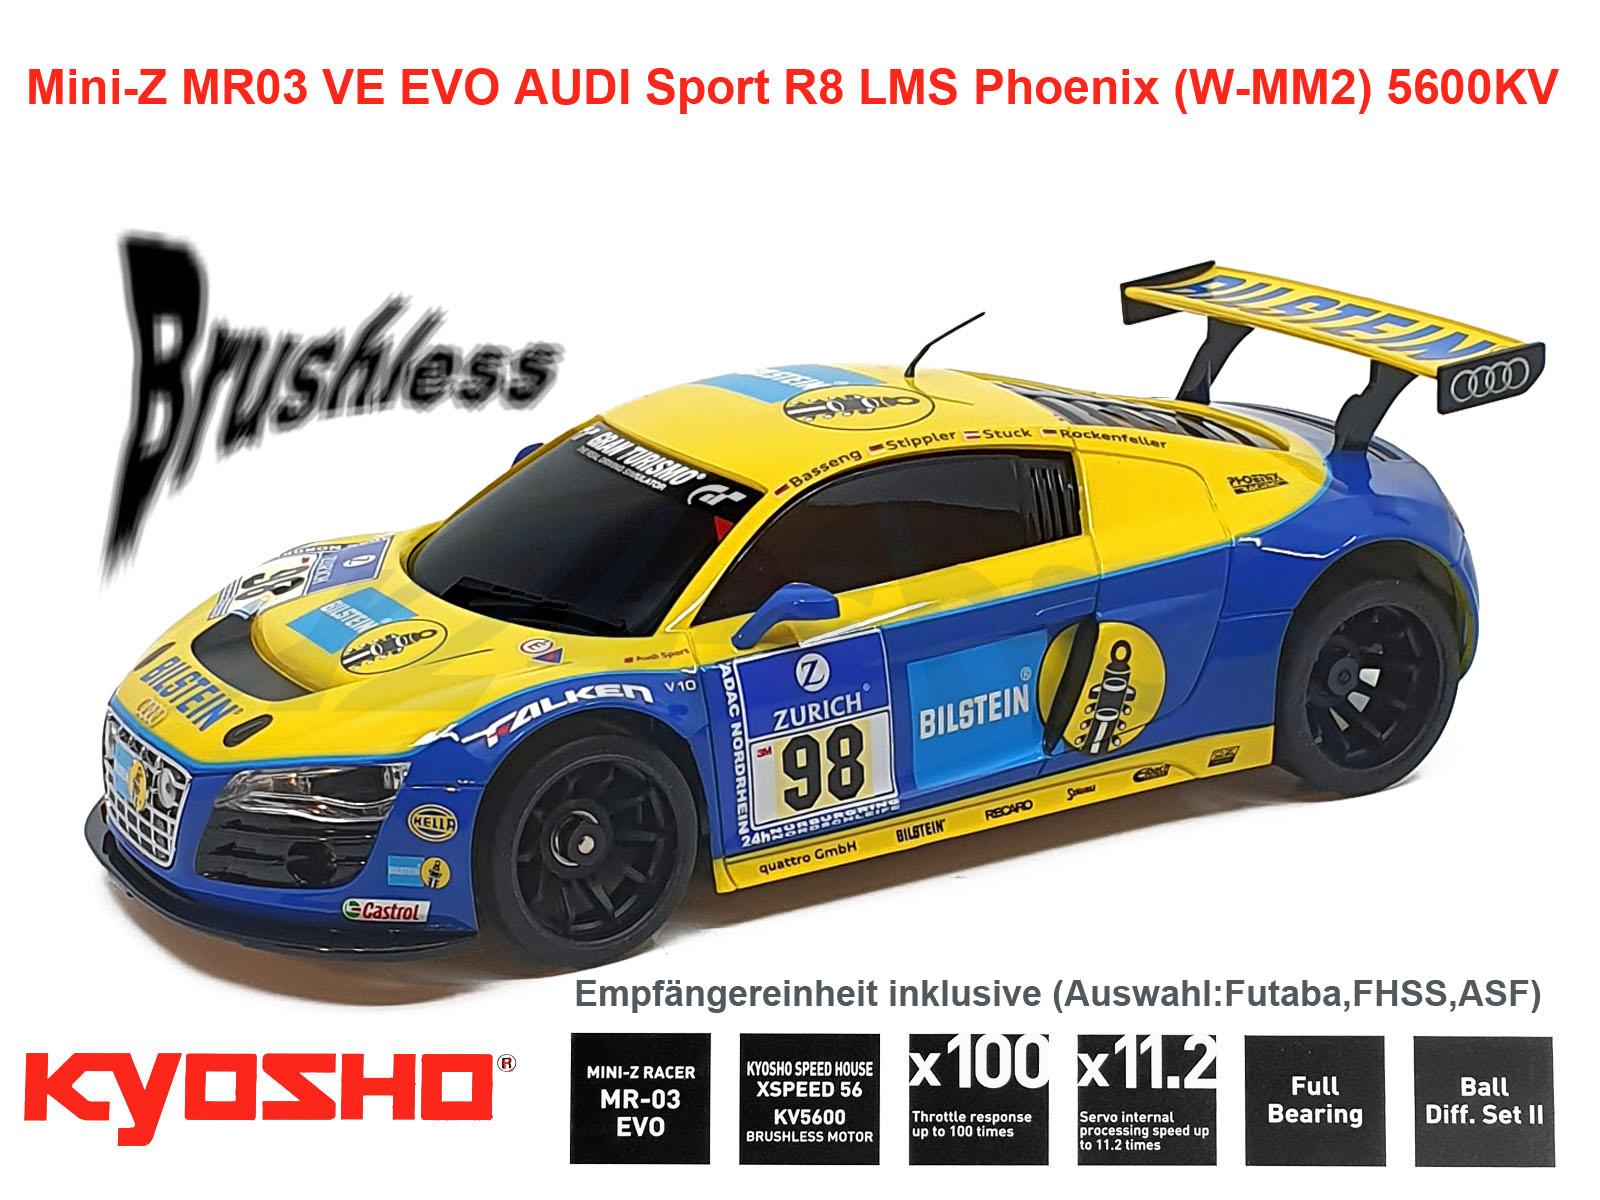 Kyosho Mini-Z Racer MR-04 Evo2 Chassis Set 4100KV (N-MM2) 32